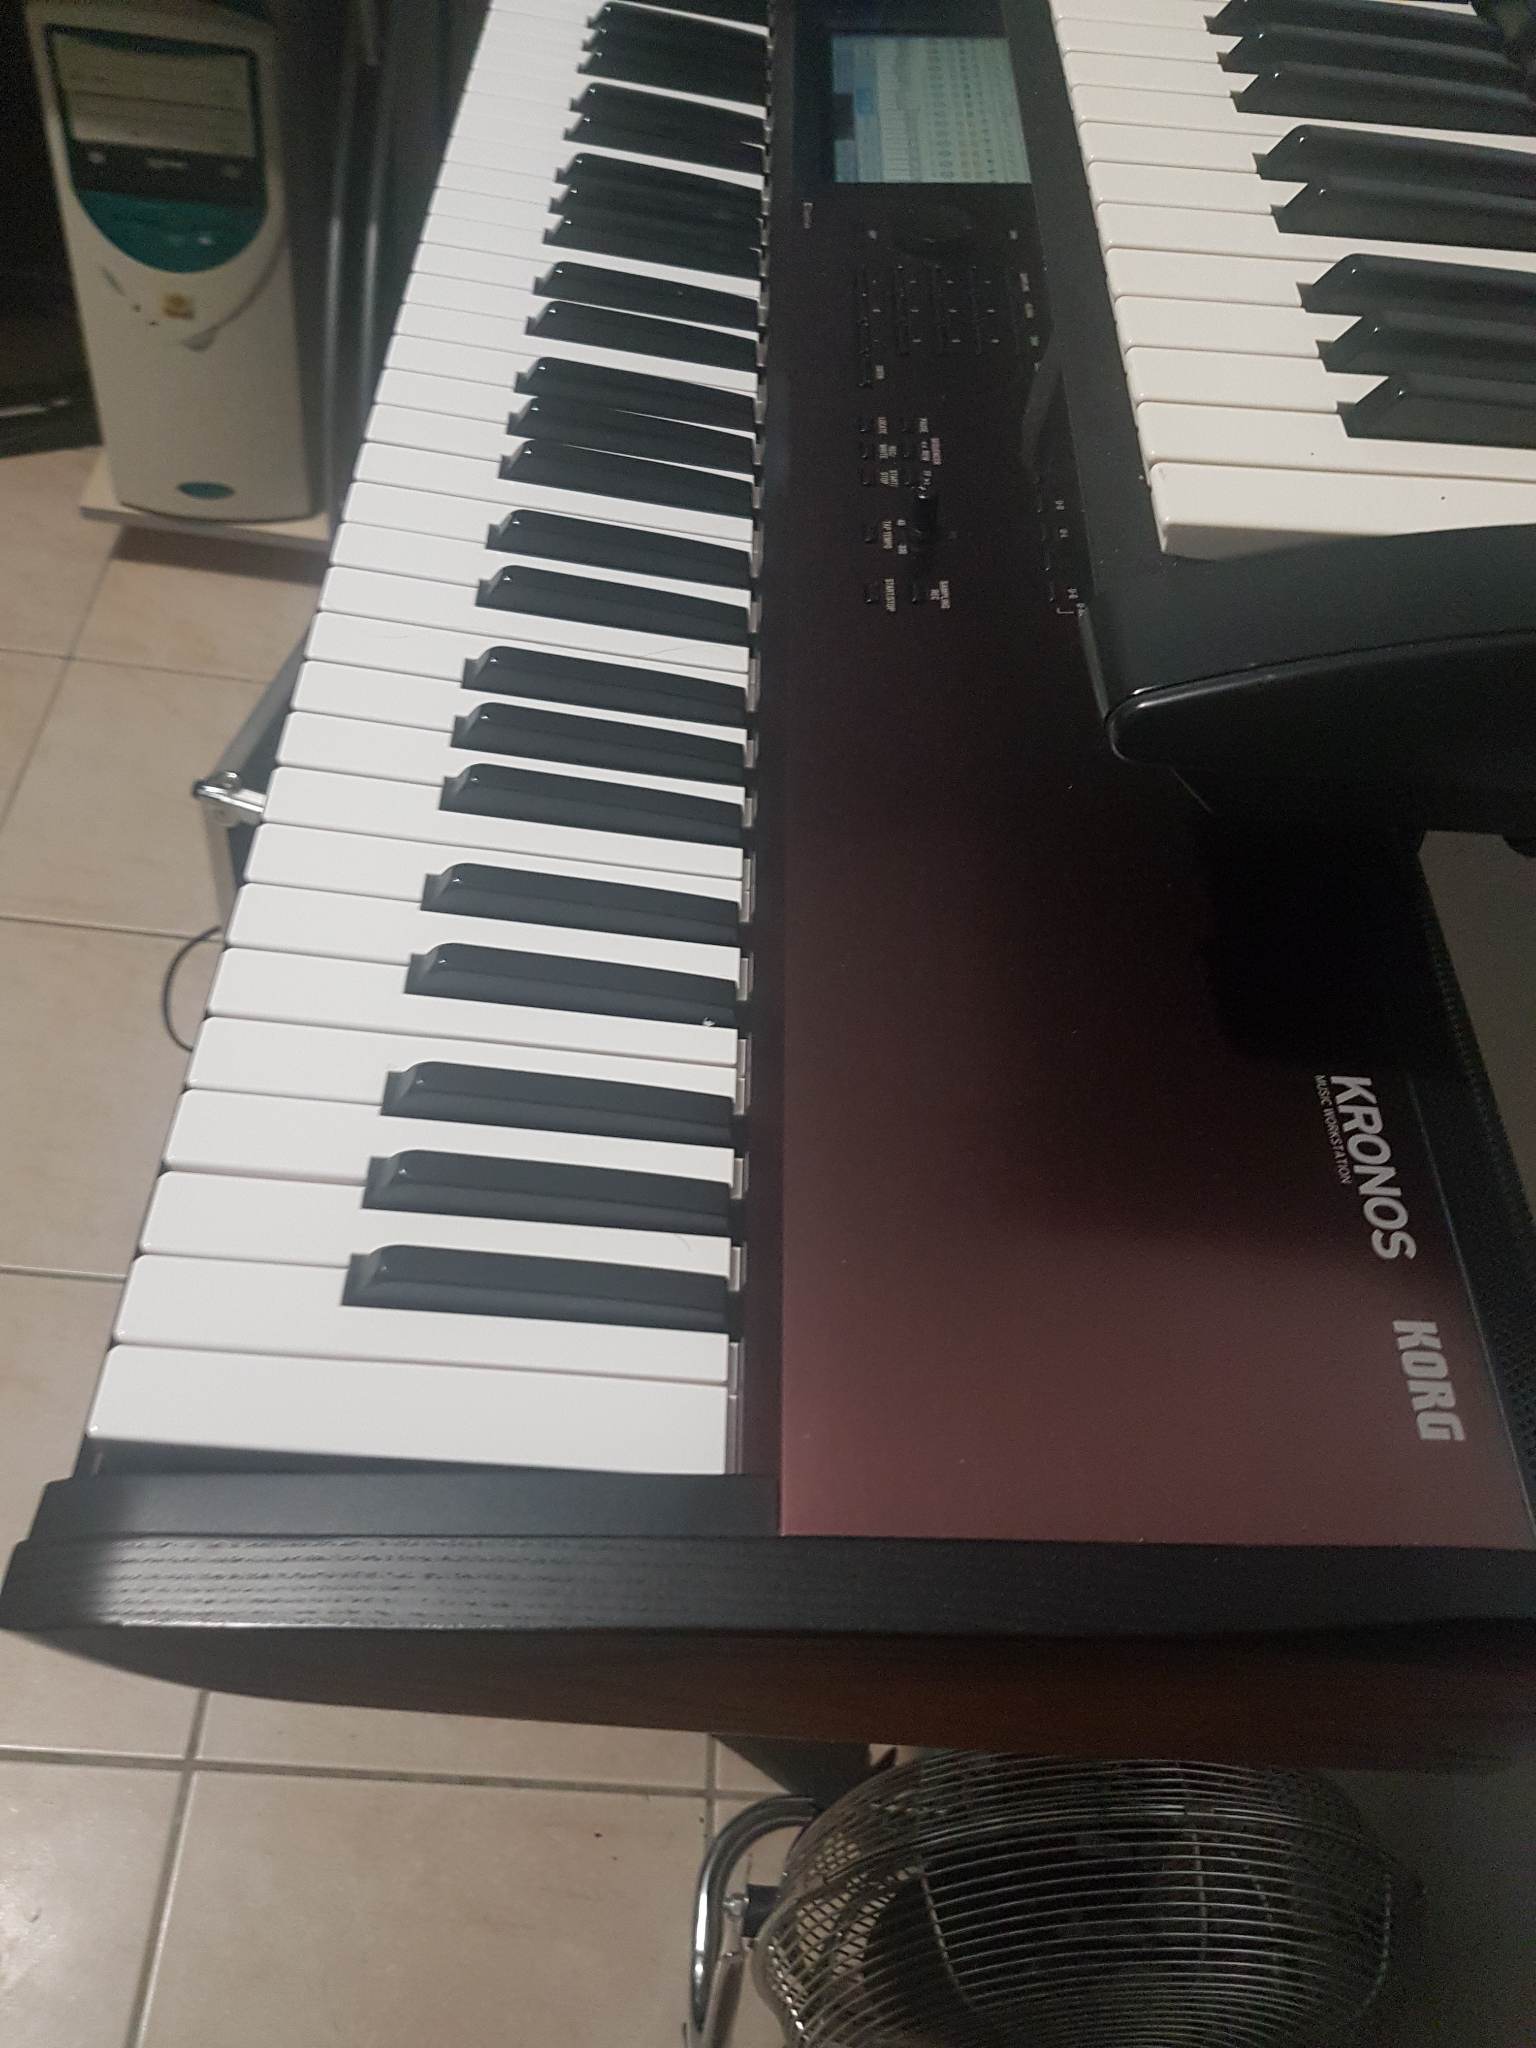 Piano Digital Stage E-Piano Set 88 Touches 600 Voix EQ AUX Banc